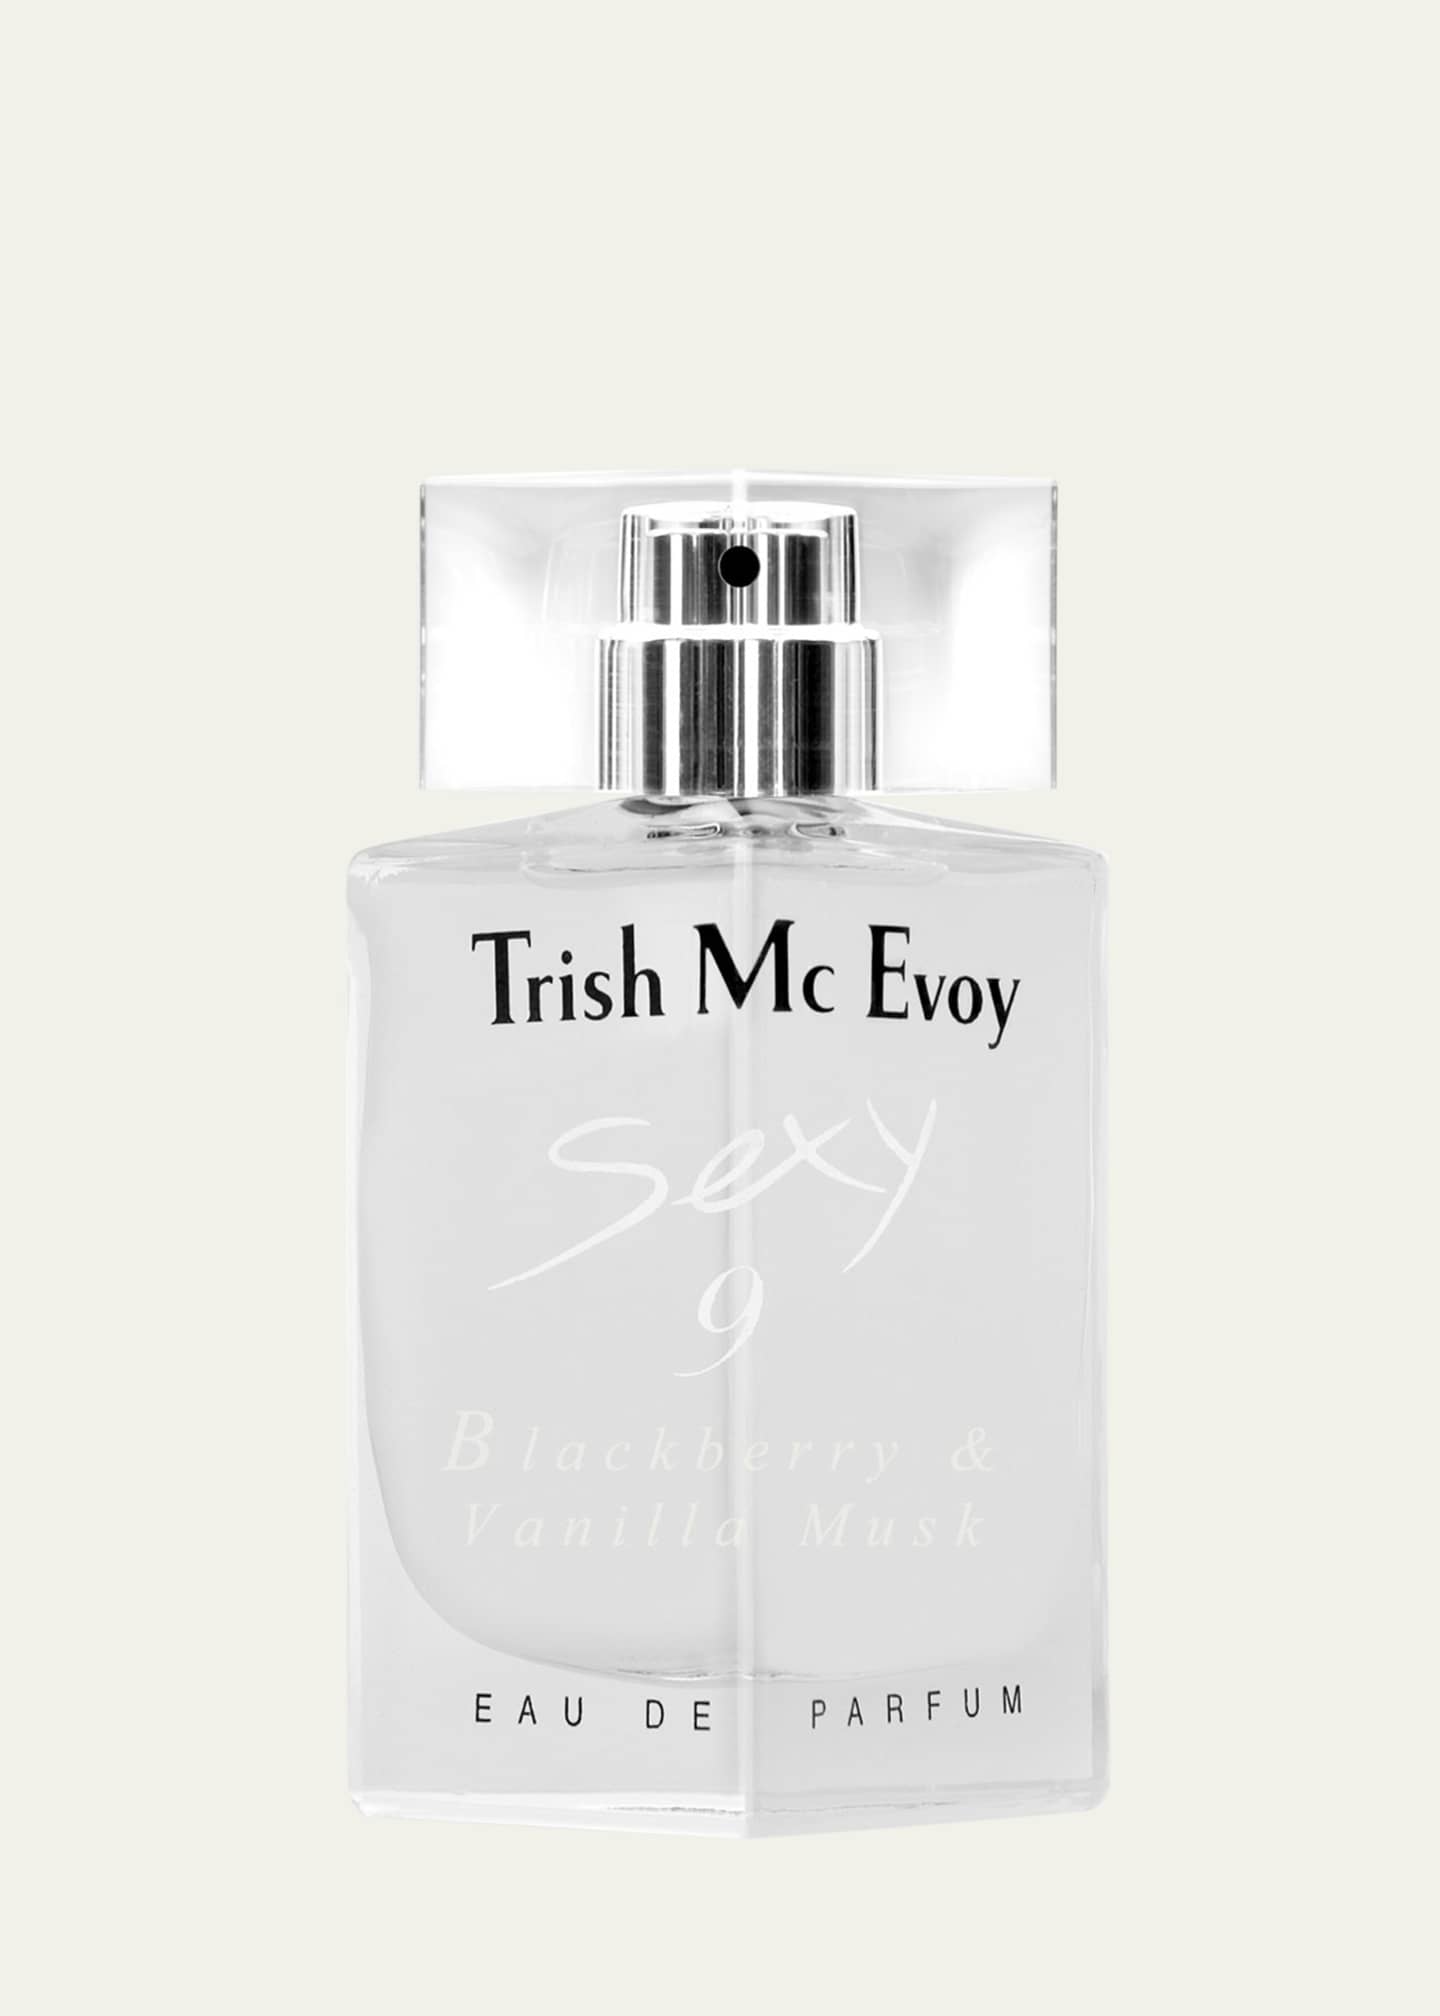 Trish McEvoy Sexy 9 Blackberry & Vanilla Musk Eau de Parfum, 1.7 oz.